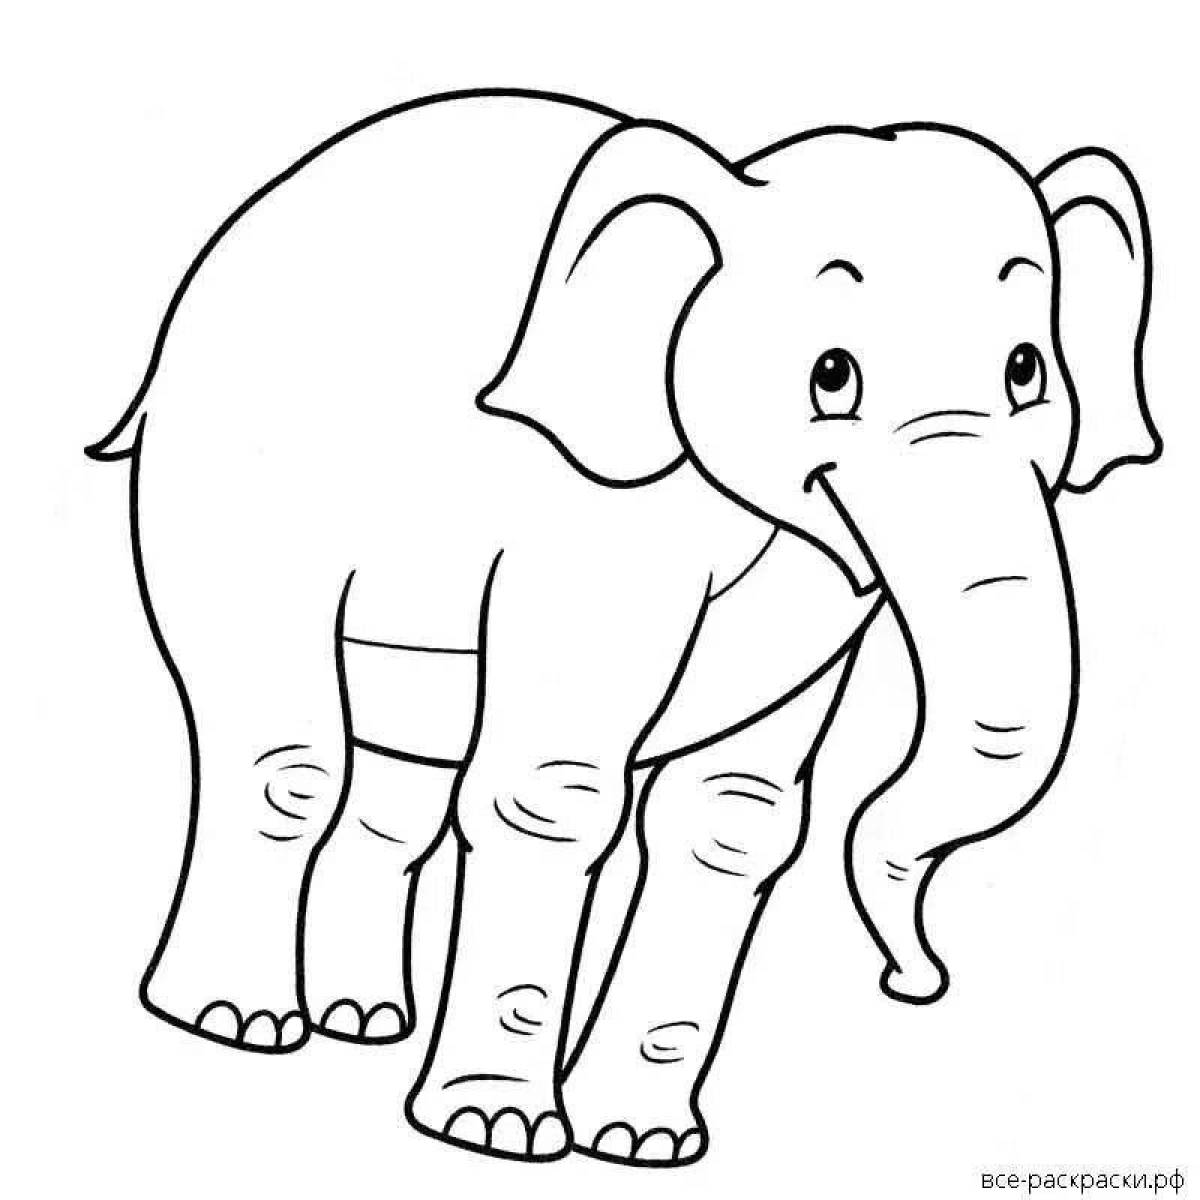 To the story of Kuprin the elephant grade 3 #8